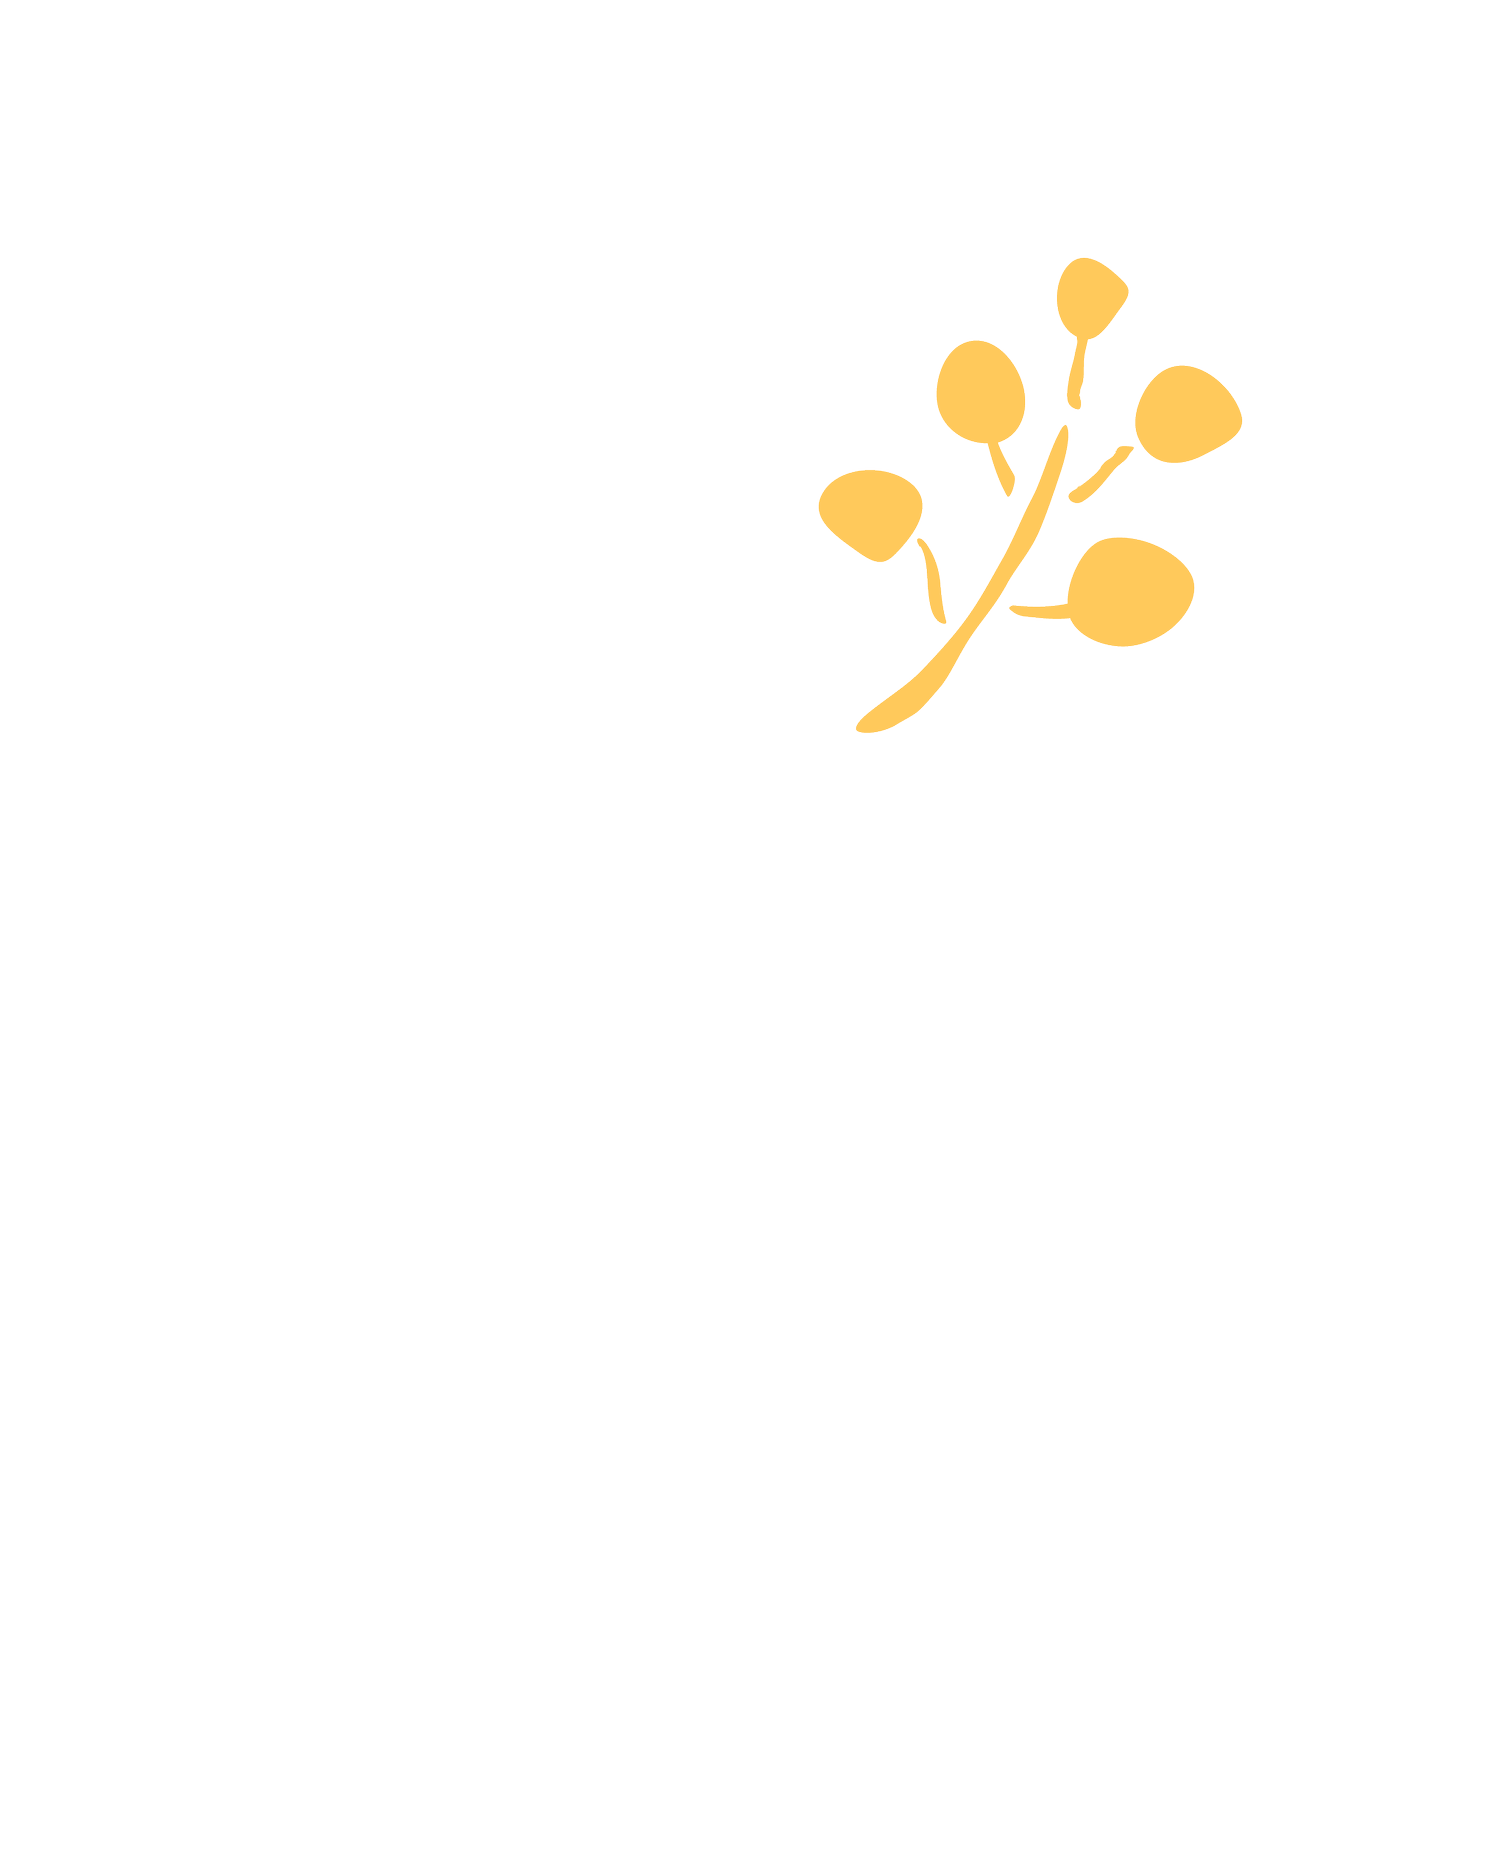 The Wattle Tree Clinic